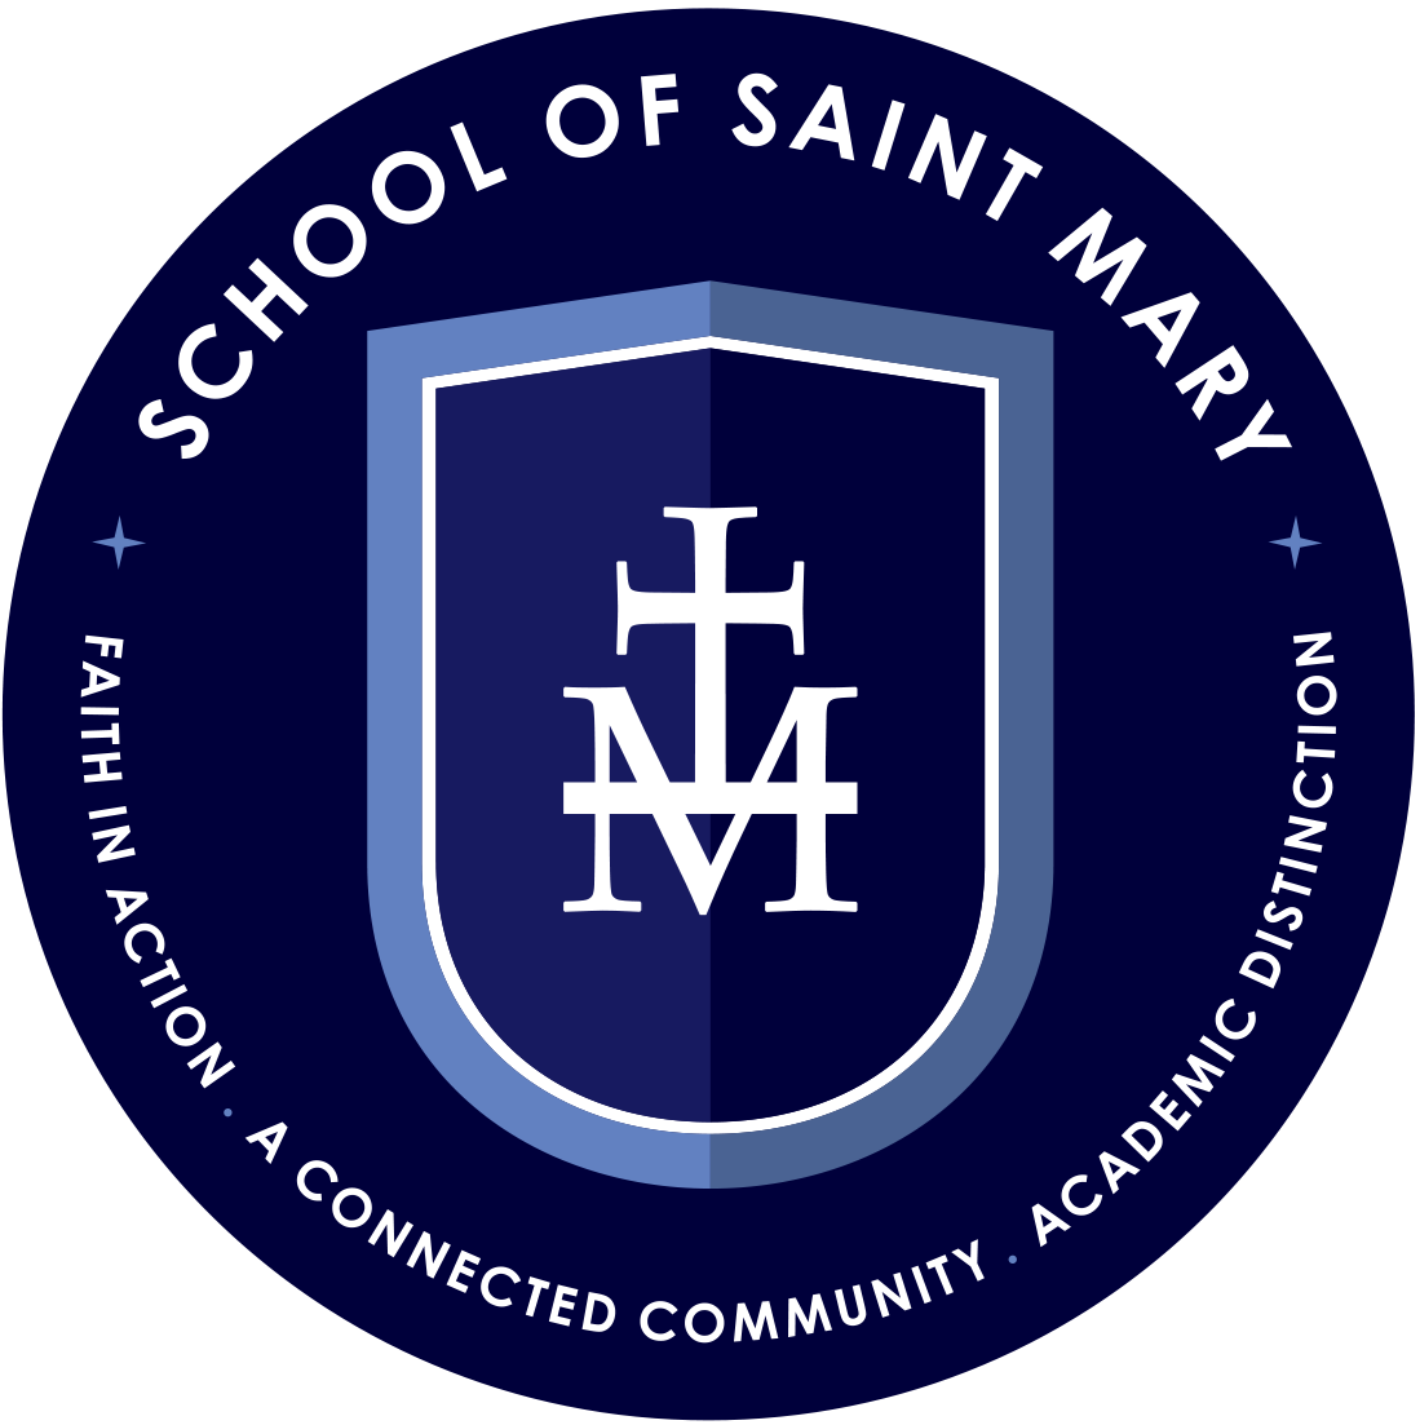 School of Saint Mary Crest